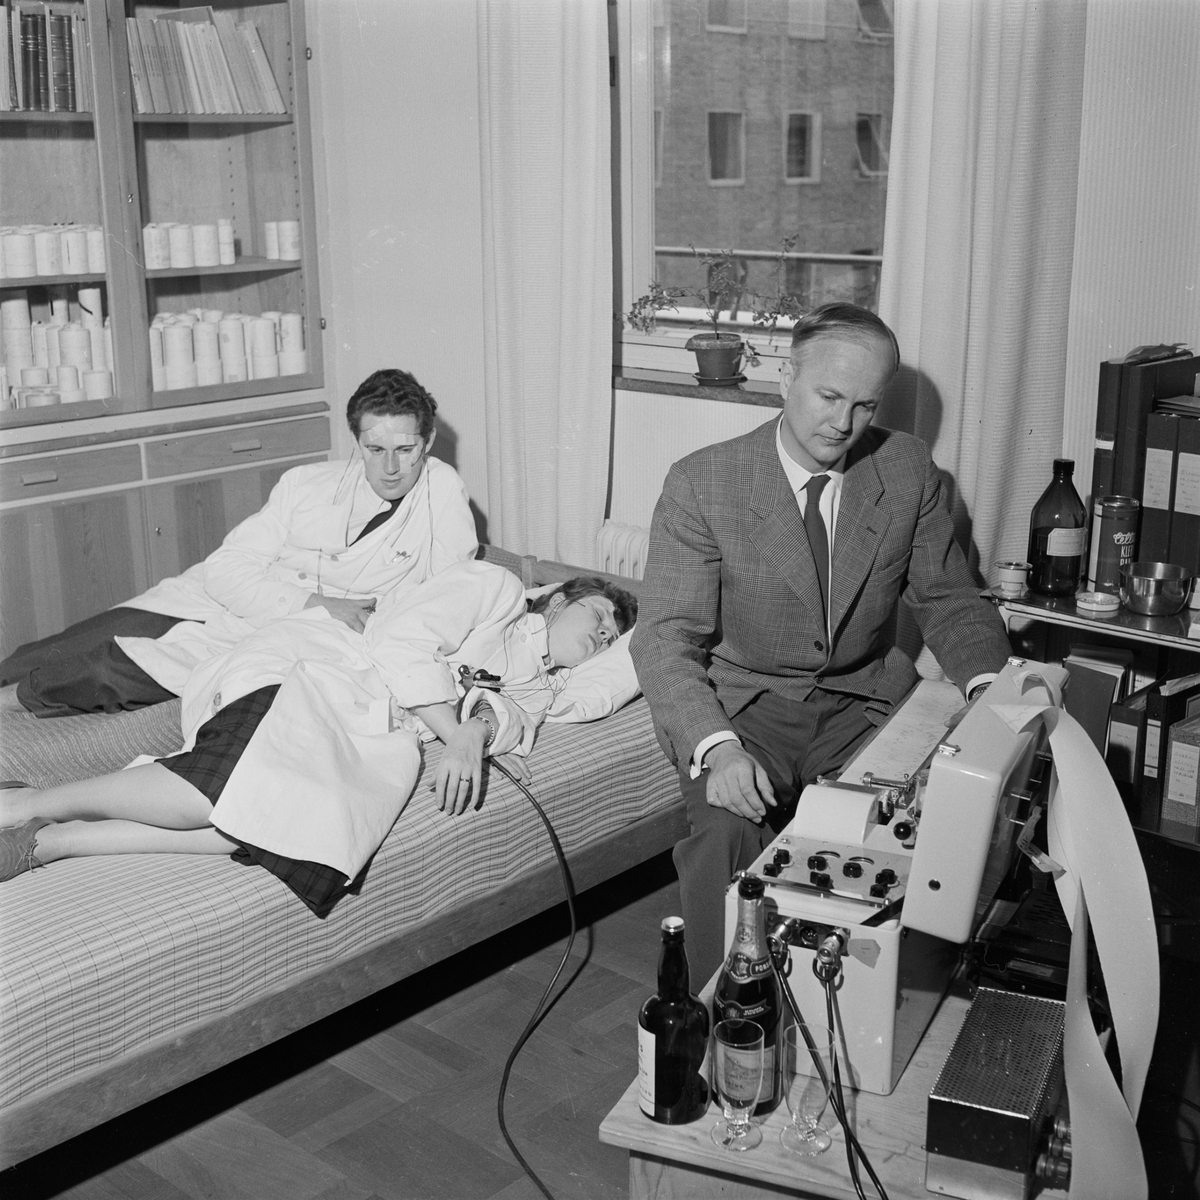 Akademiska sjukhuset, alkoholprov i laboratorium, Uppsala, april 1957